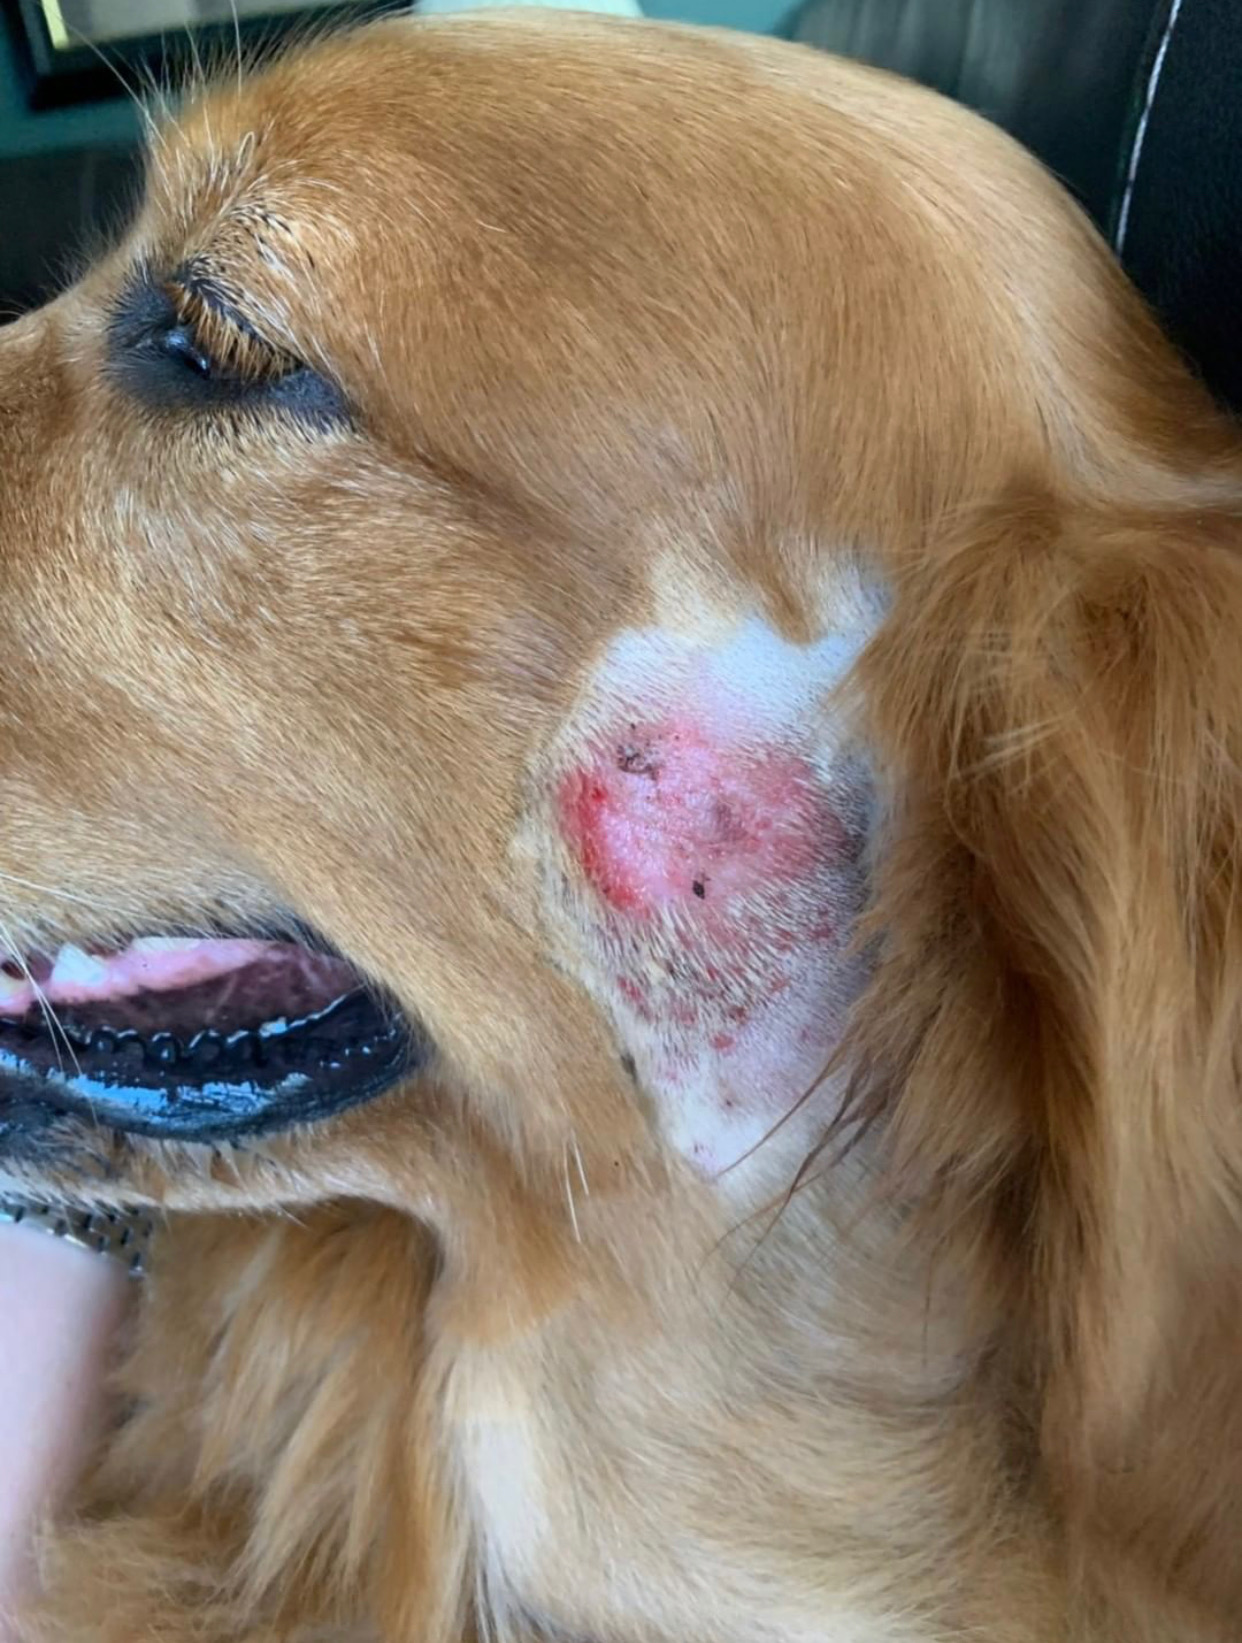 how do you get rid of heat rash on a dog